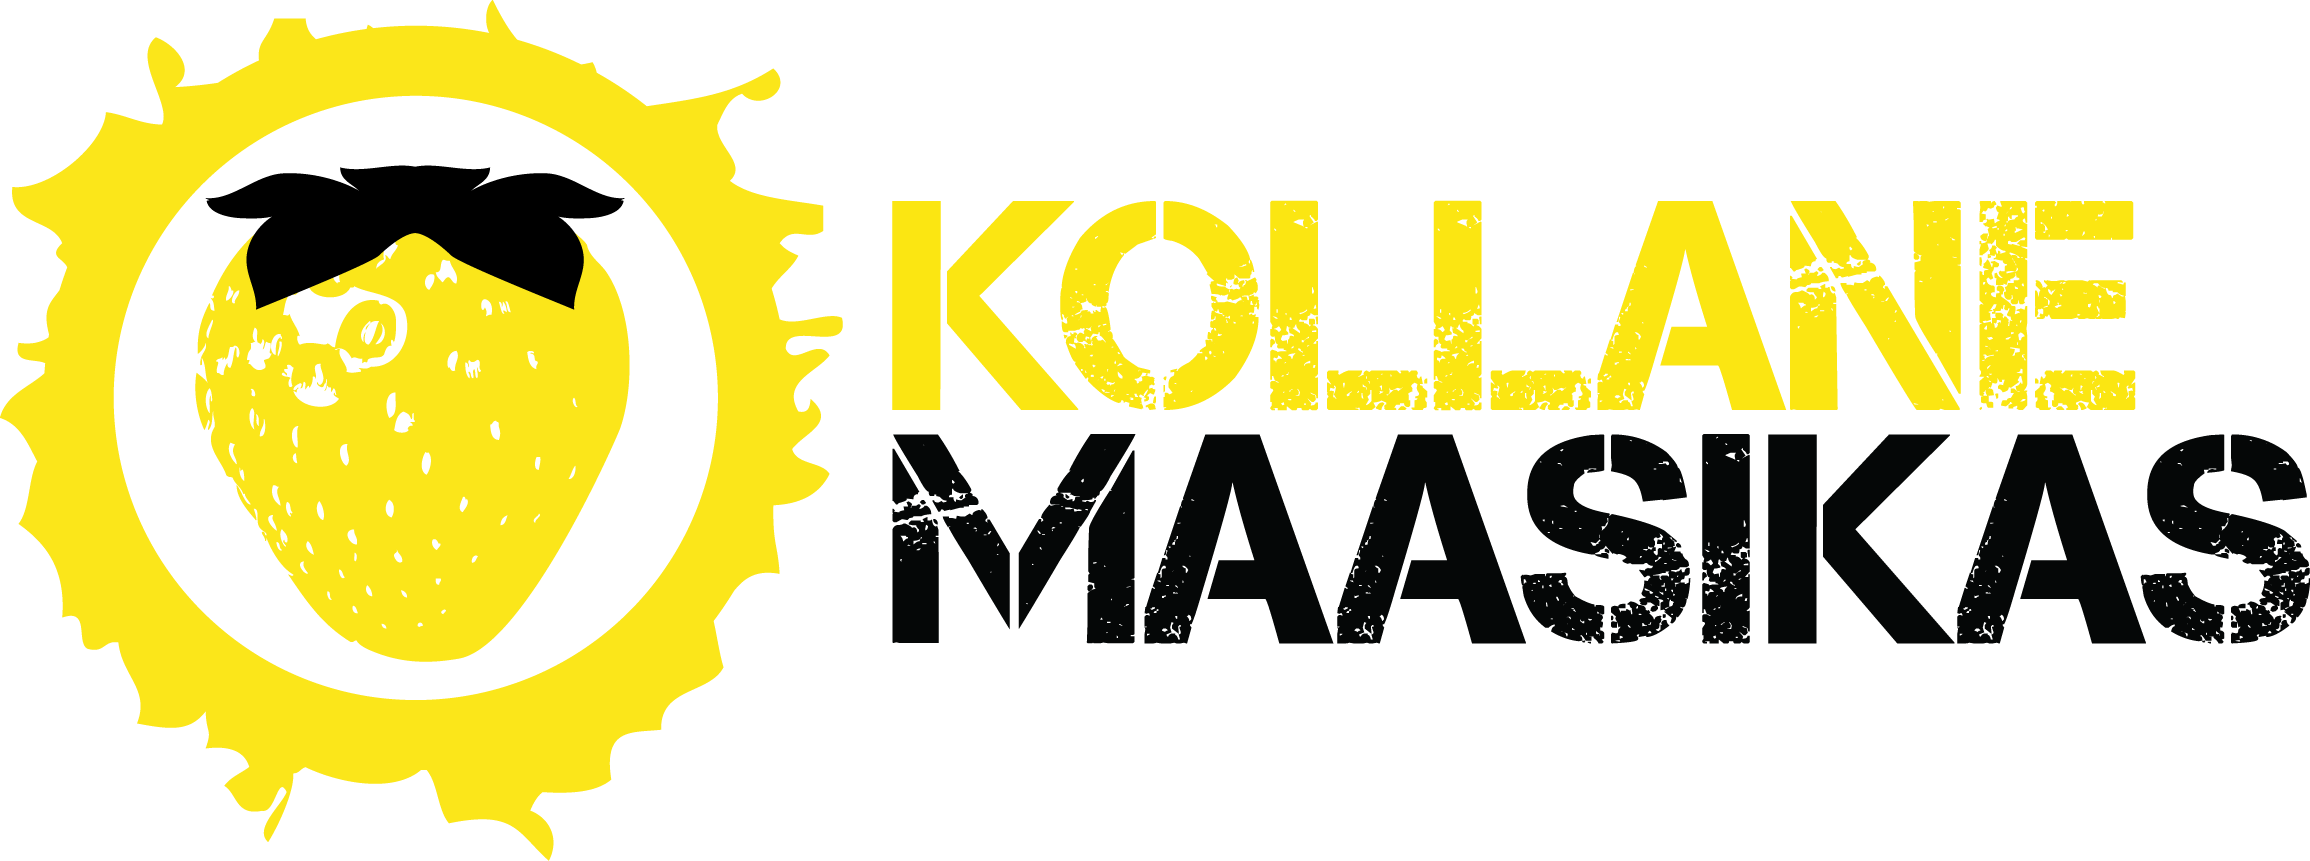 Kollane Maasikas Logo - Team-hank-cap-brown Magnet (2310x861)